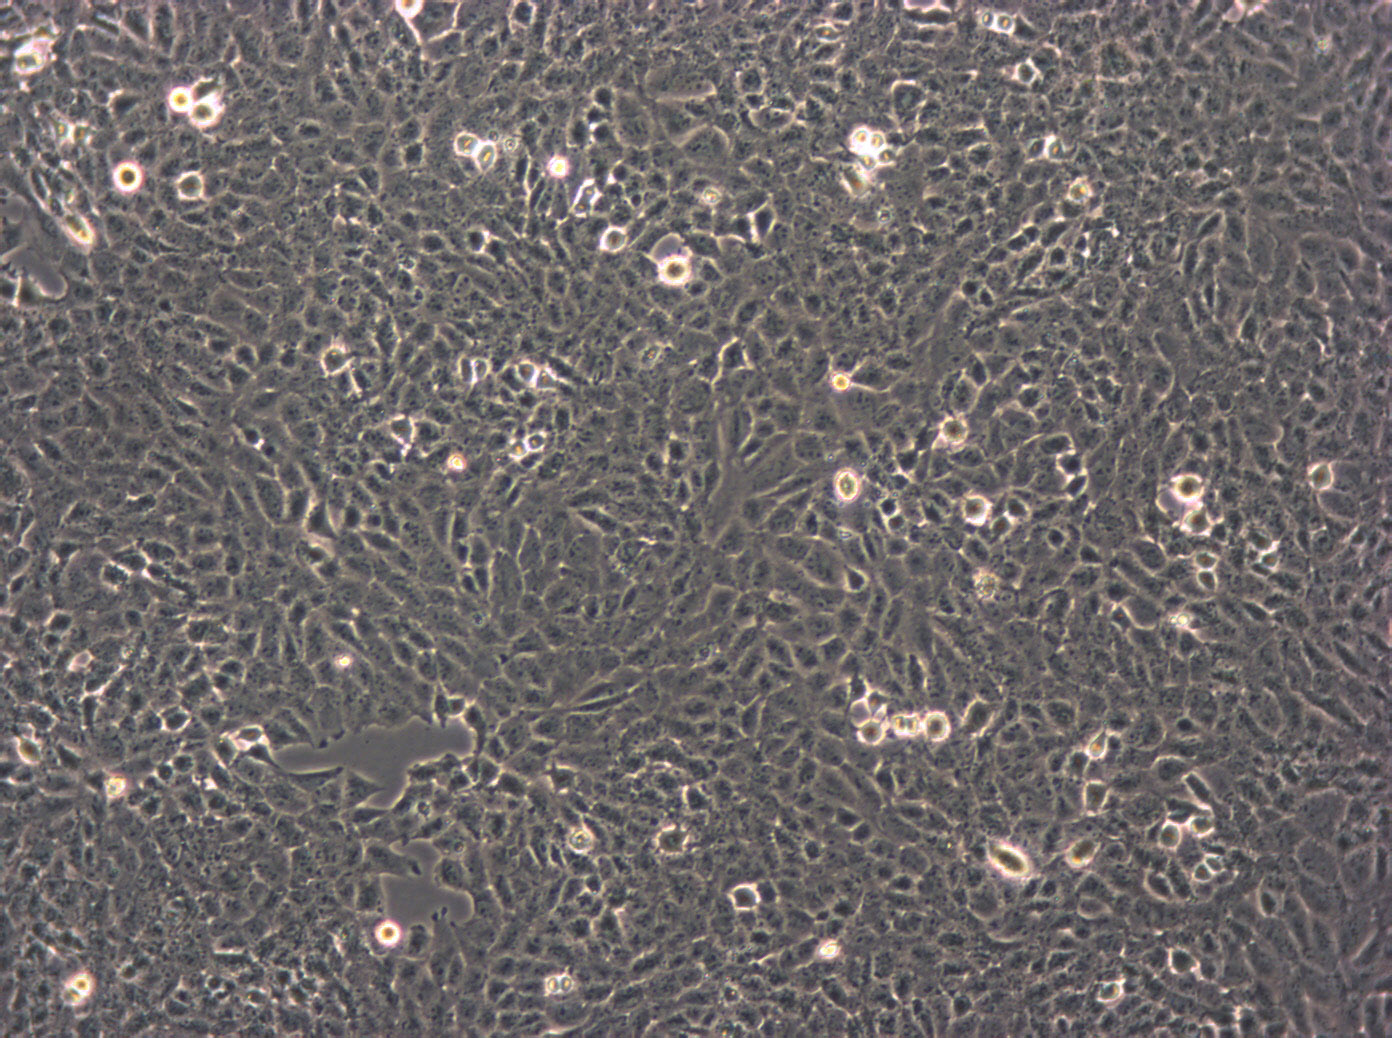 TM3 cell line小鼠睾丸间质细胞系,TM3 cell line